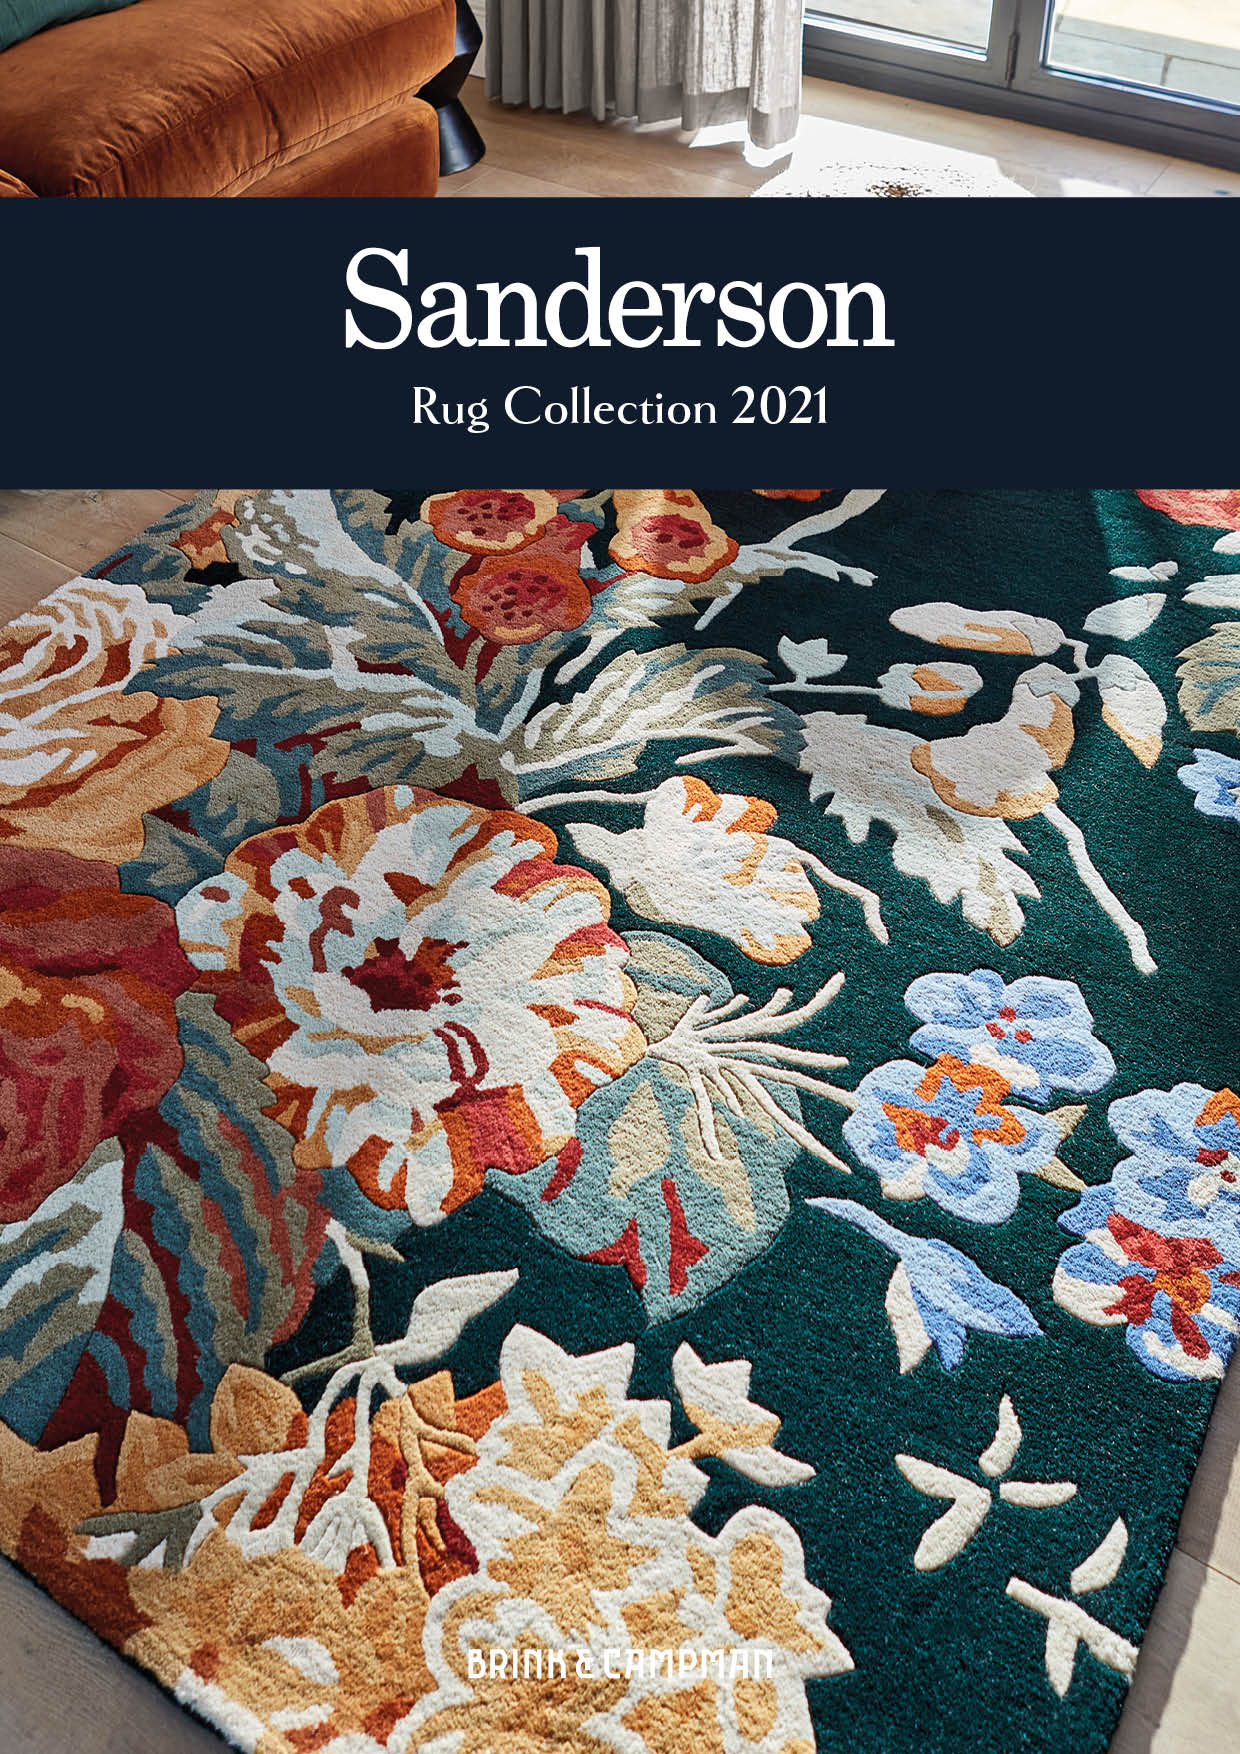 Sanderson collection